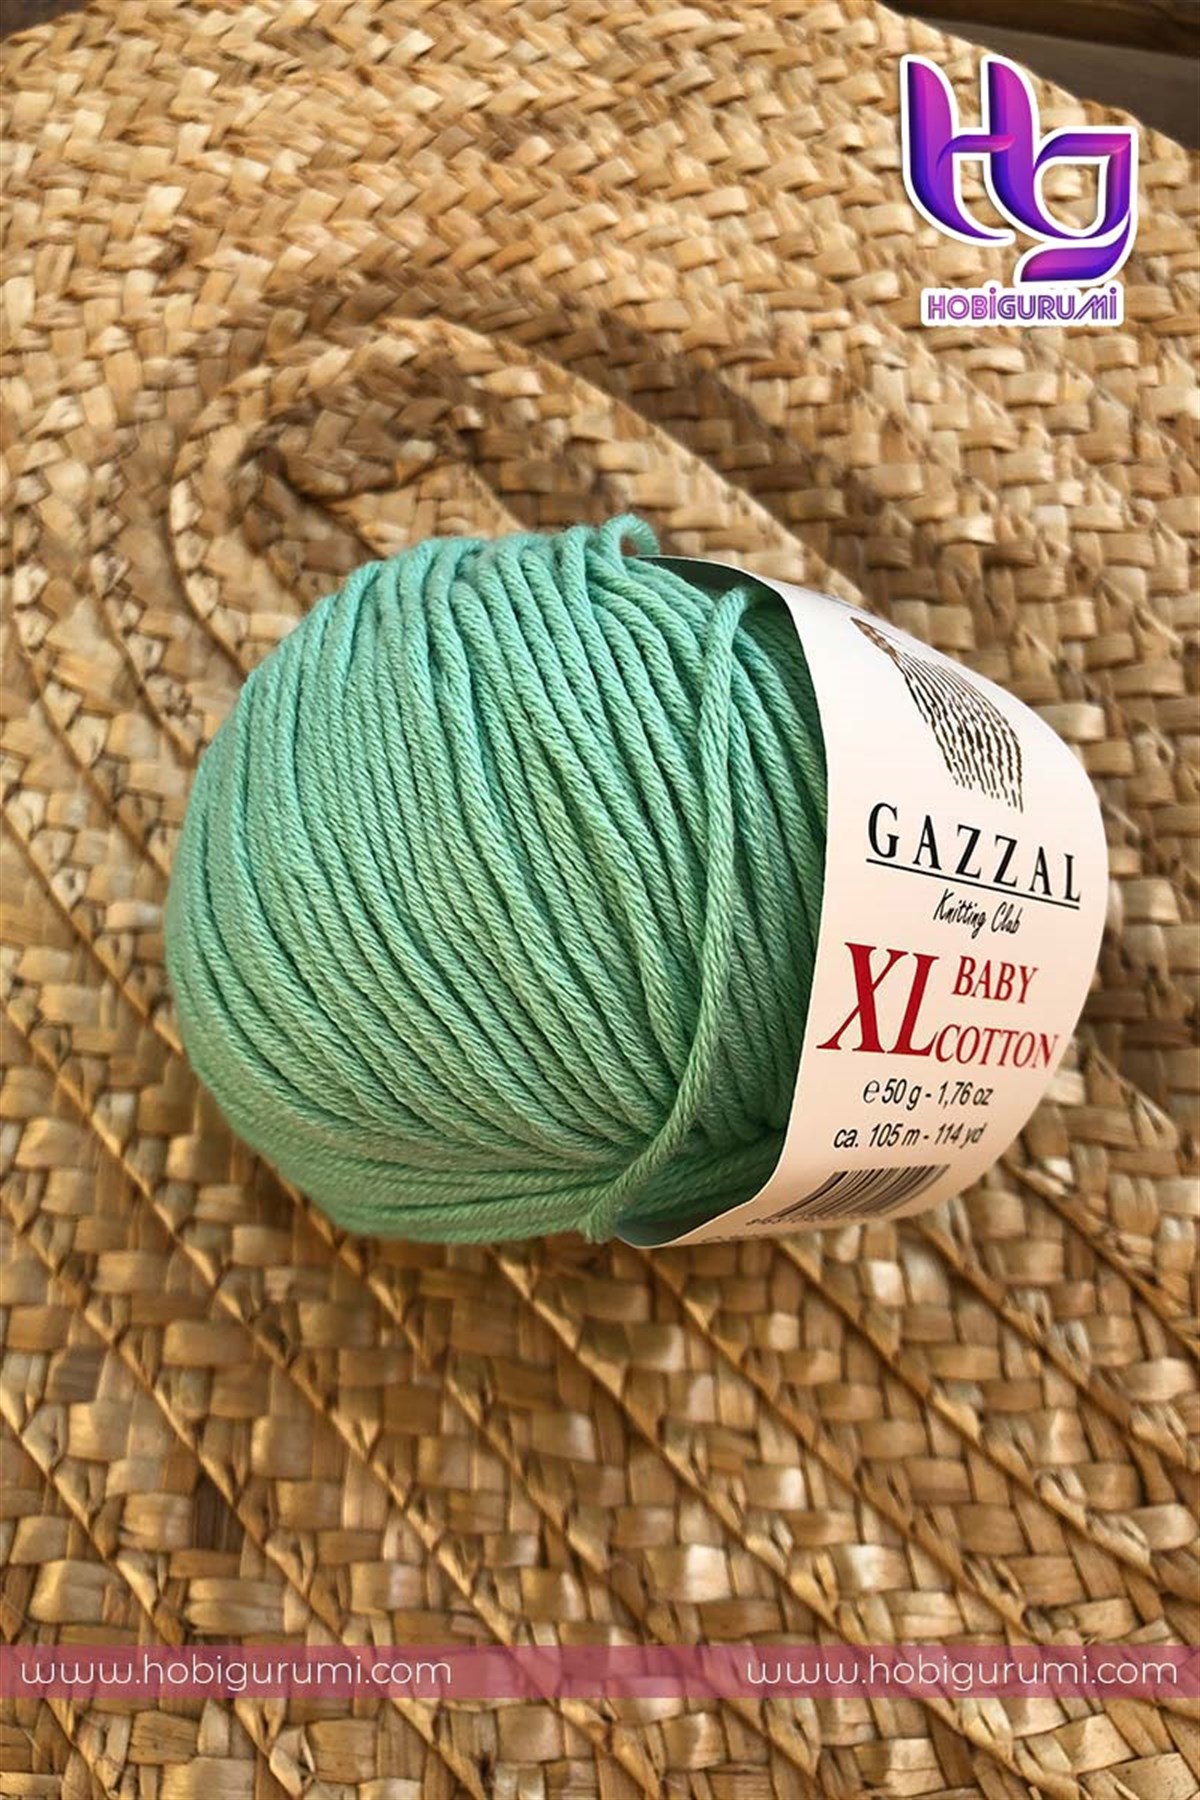 Gazzal Baby Cotton XL Su Yeşili Renk El Örgü İpi (3425)